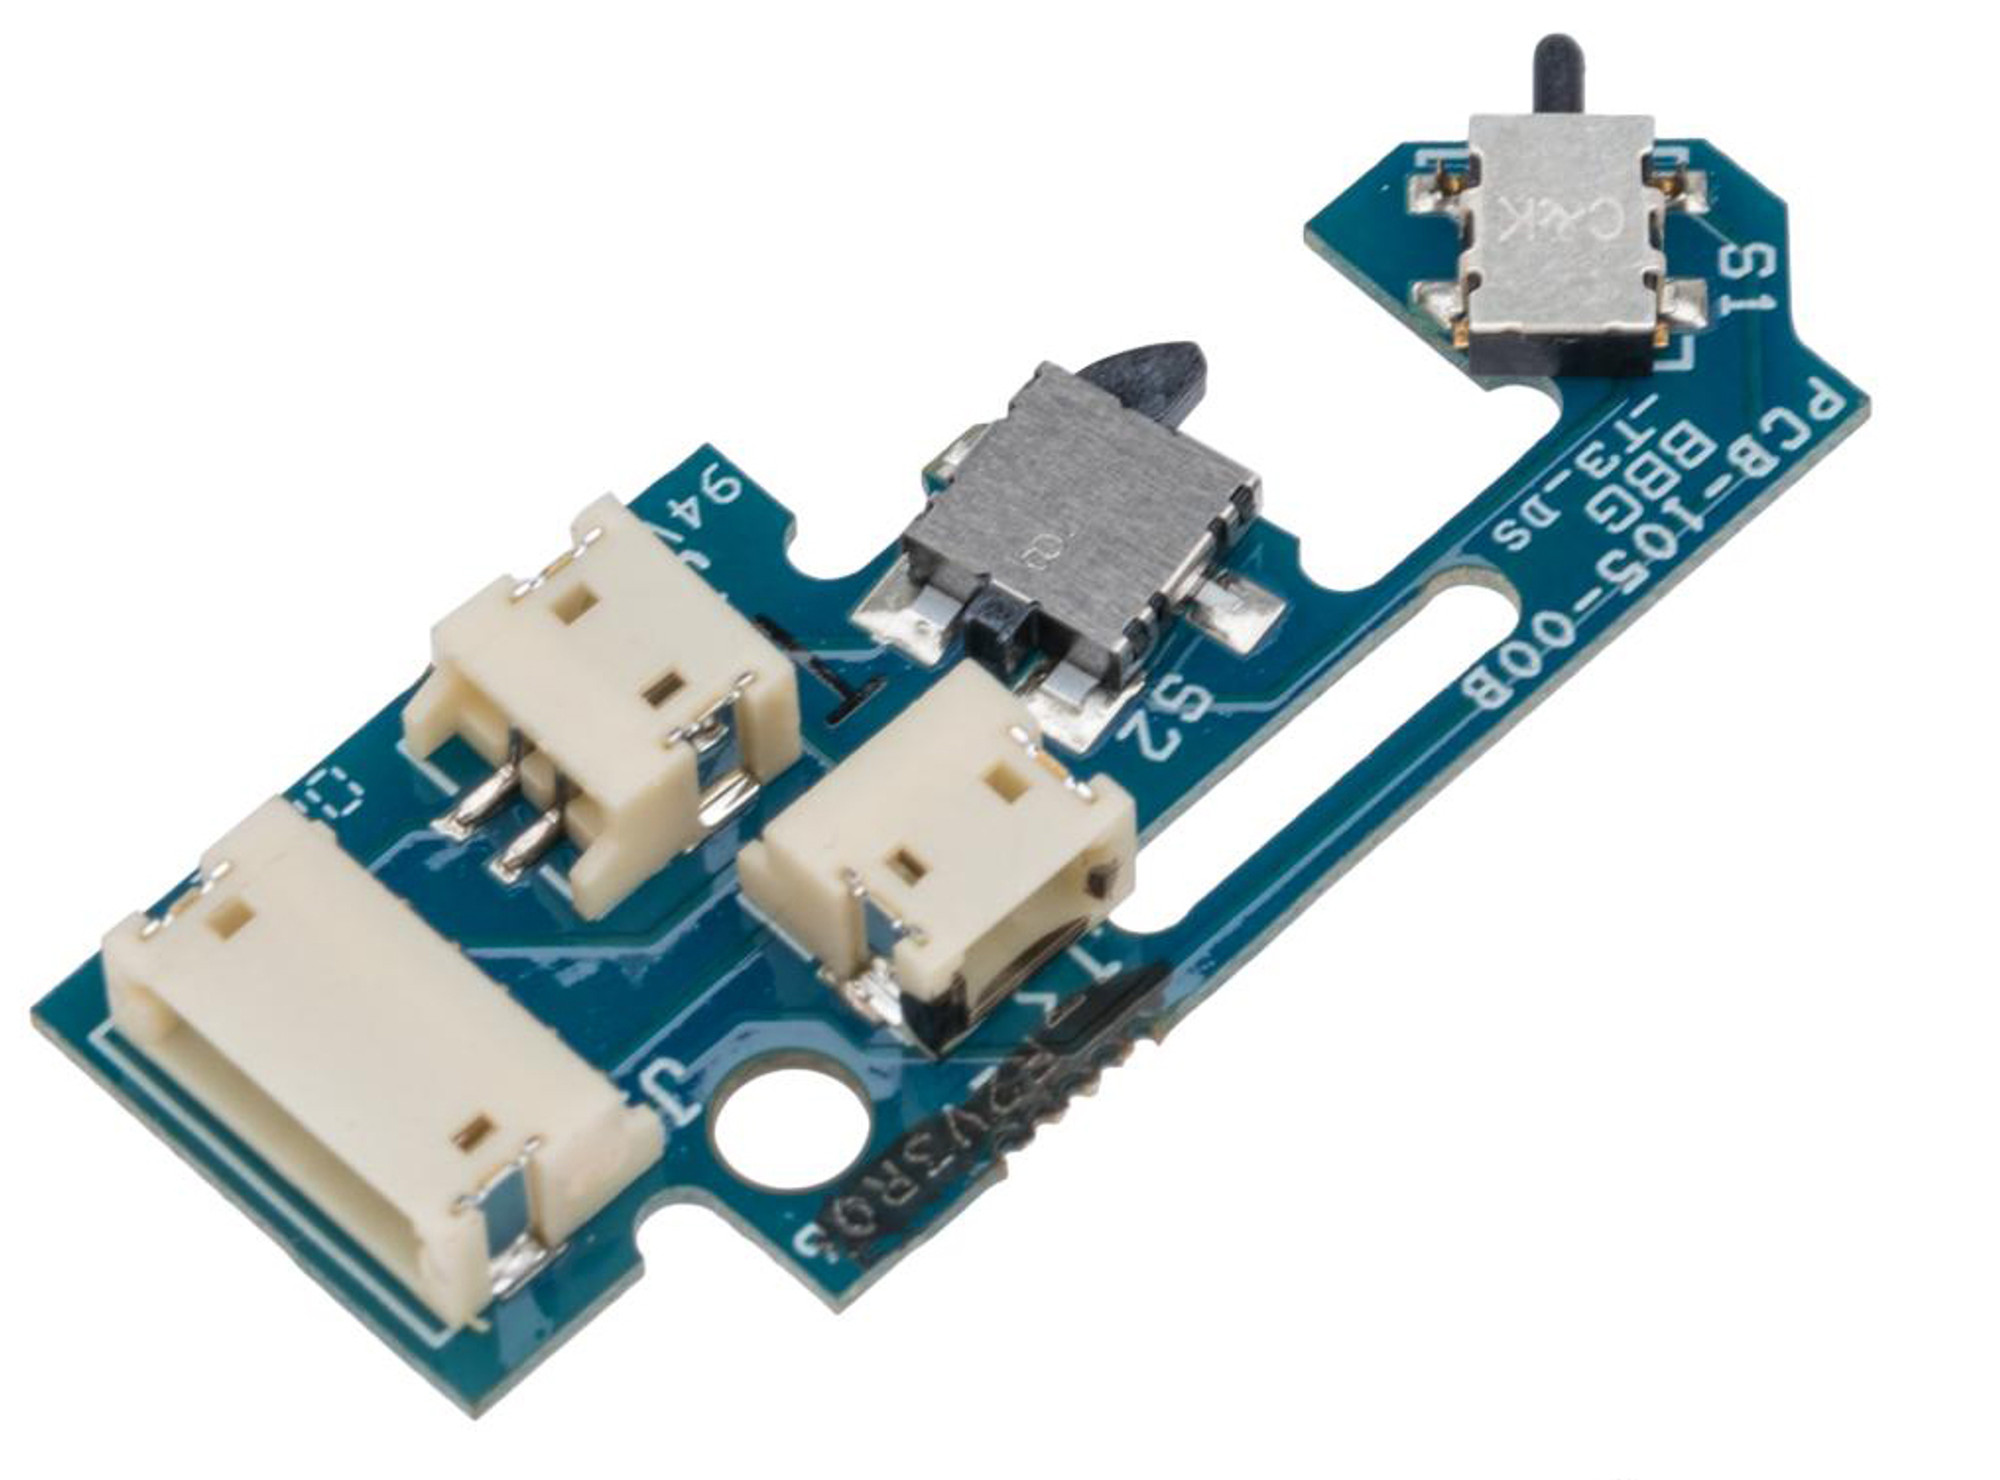 PolarStar JACK/F1 V3 OEM Replacement Switchboard